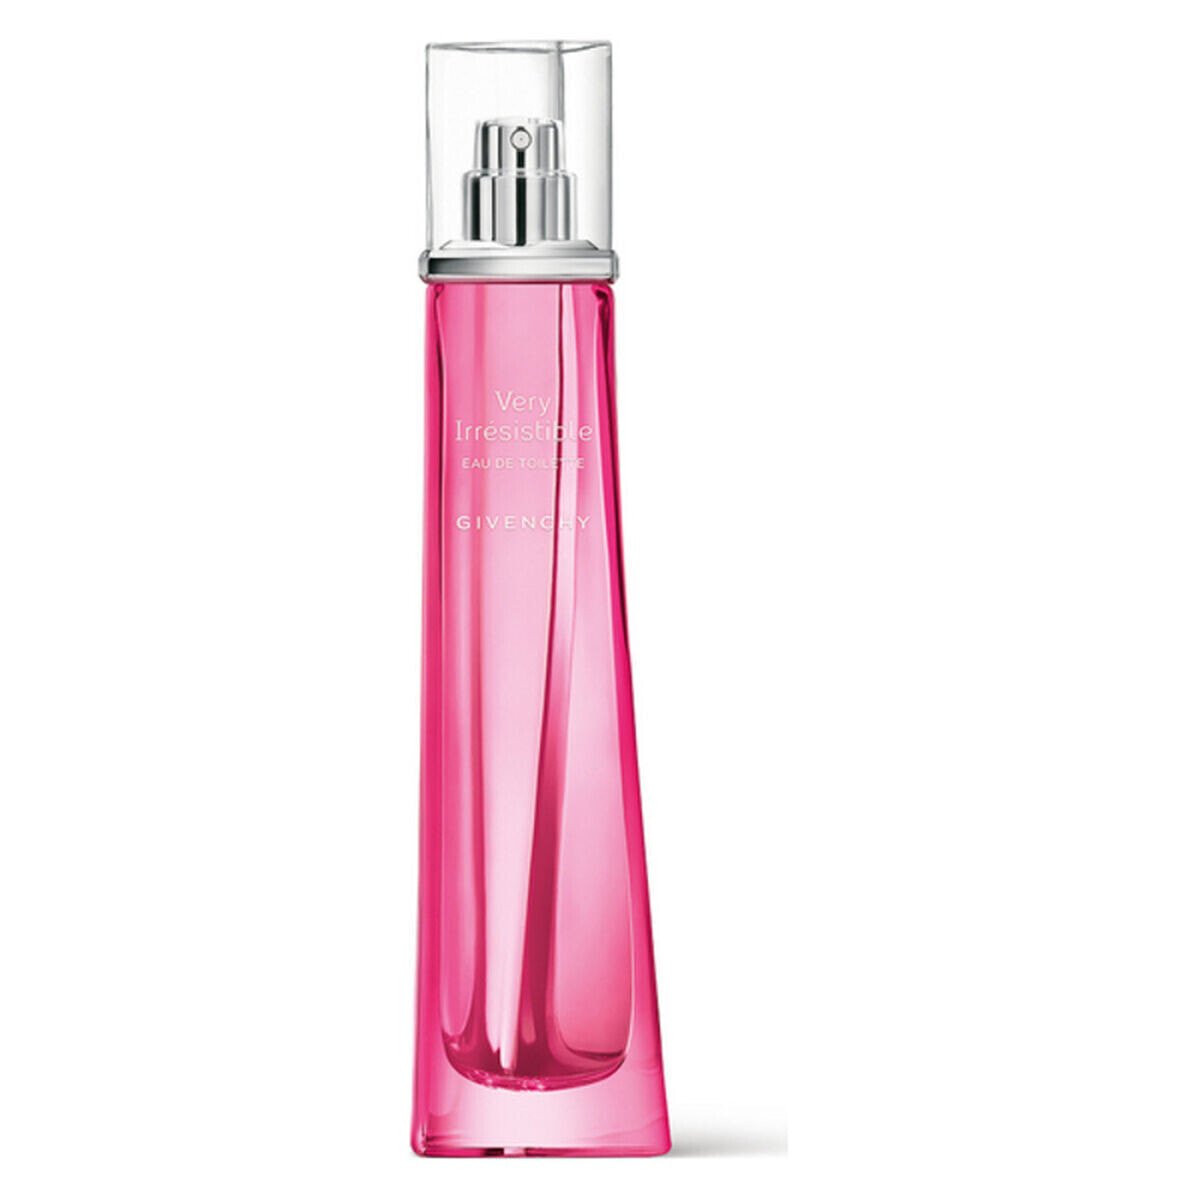 Women's Perfume Very Givenchy ETD